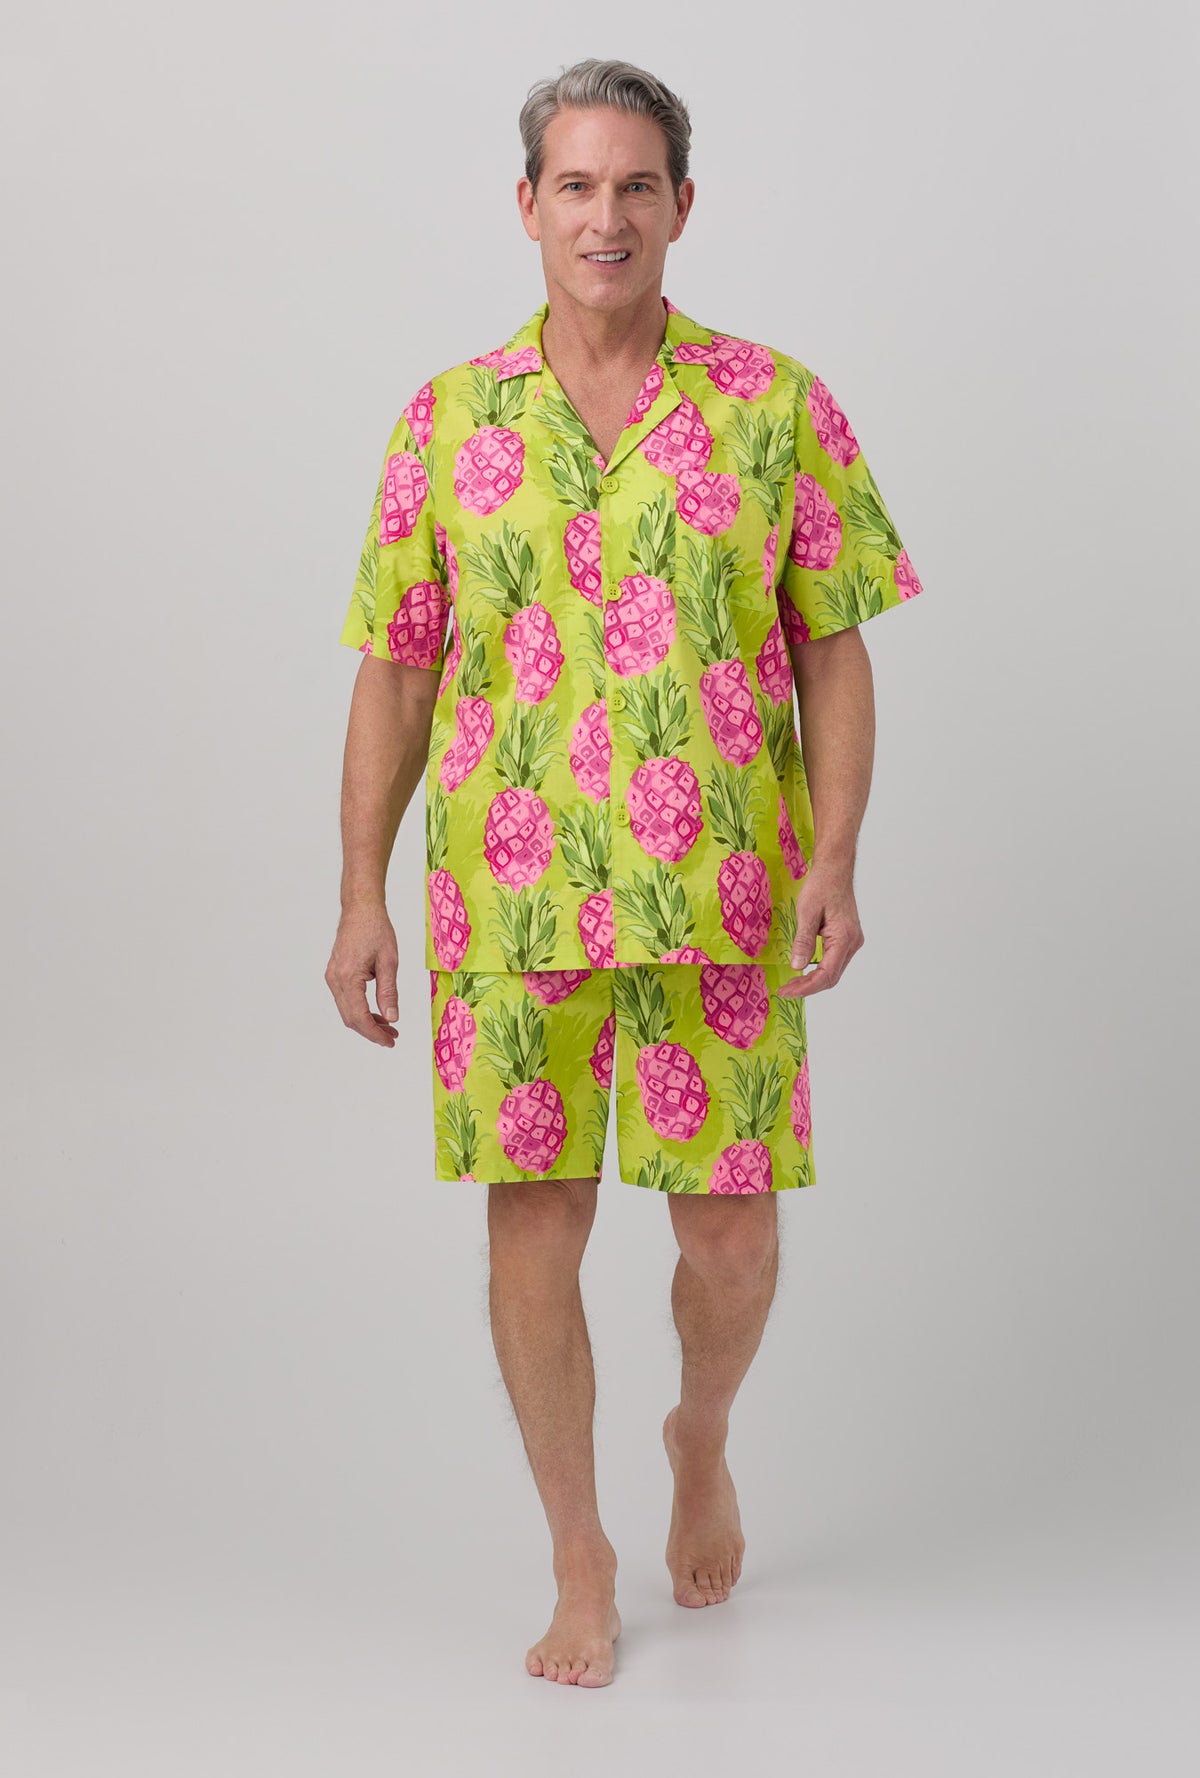 A man wearing short sleeve woven poplin short pj set with kiwi pineapple print